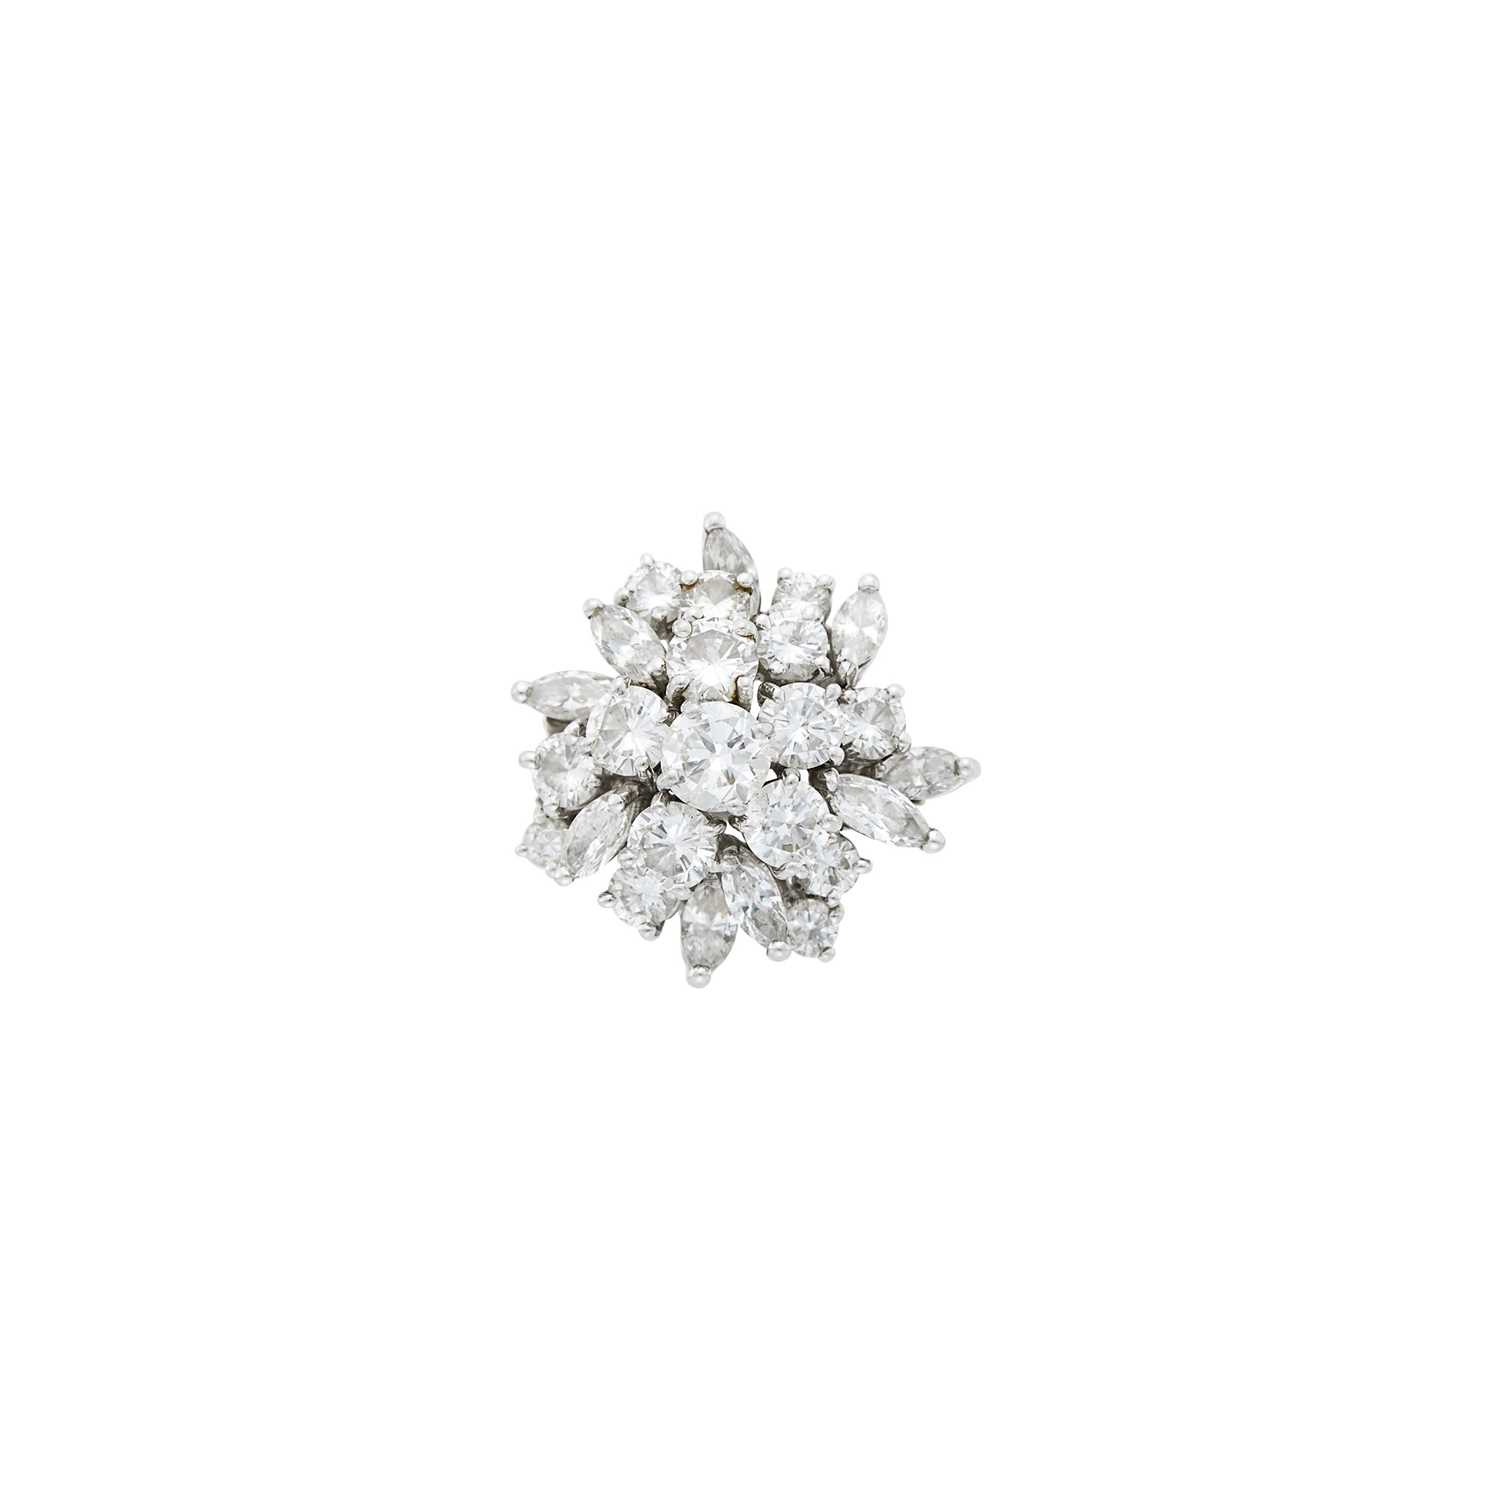 Lot 61 - Platinum and Diamond Cluster Ring